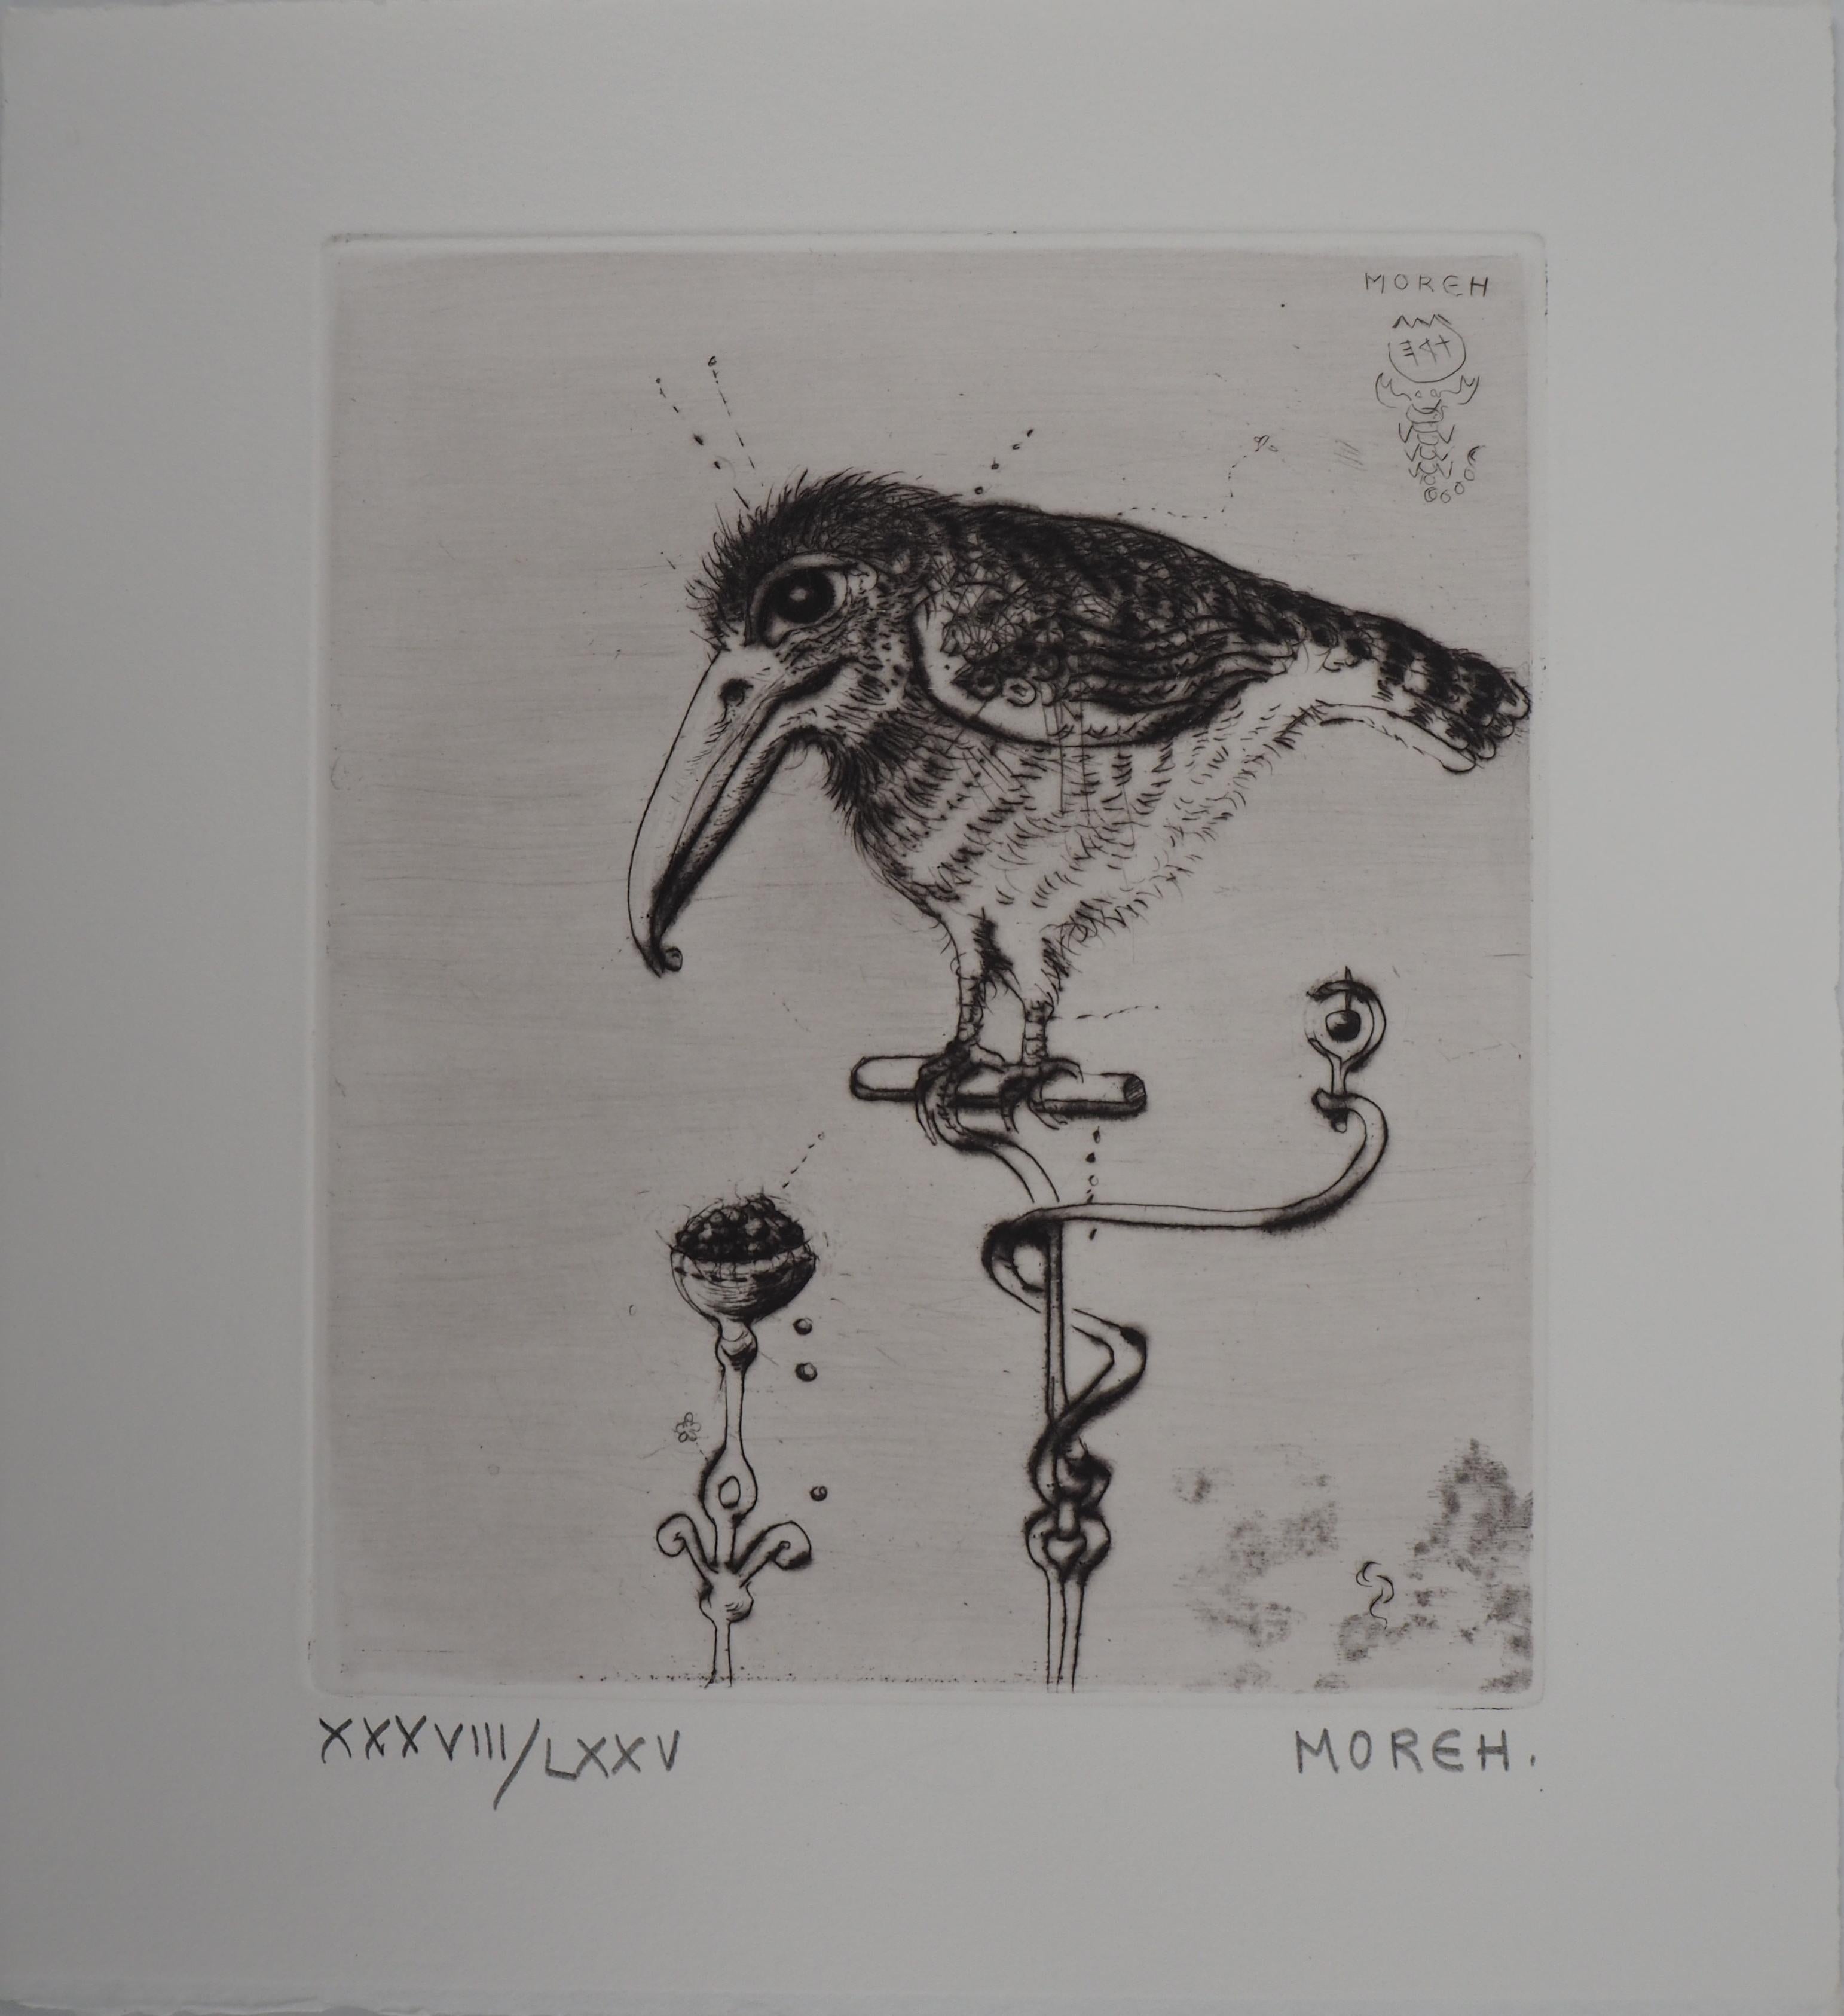 Mordecai Moreh Animal Print - The Little Bird - Etching, Ltd 75 copies